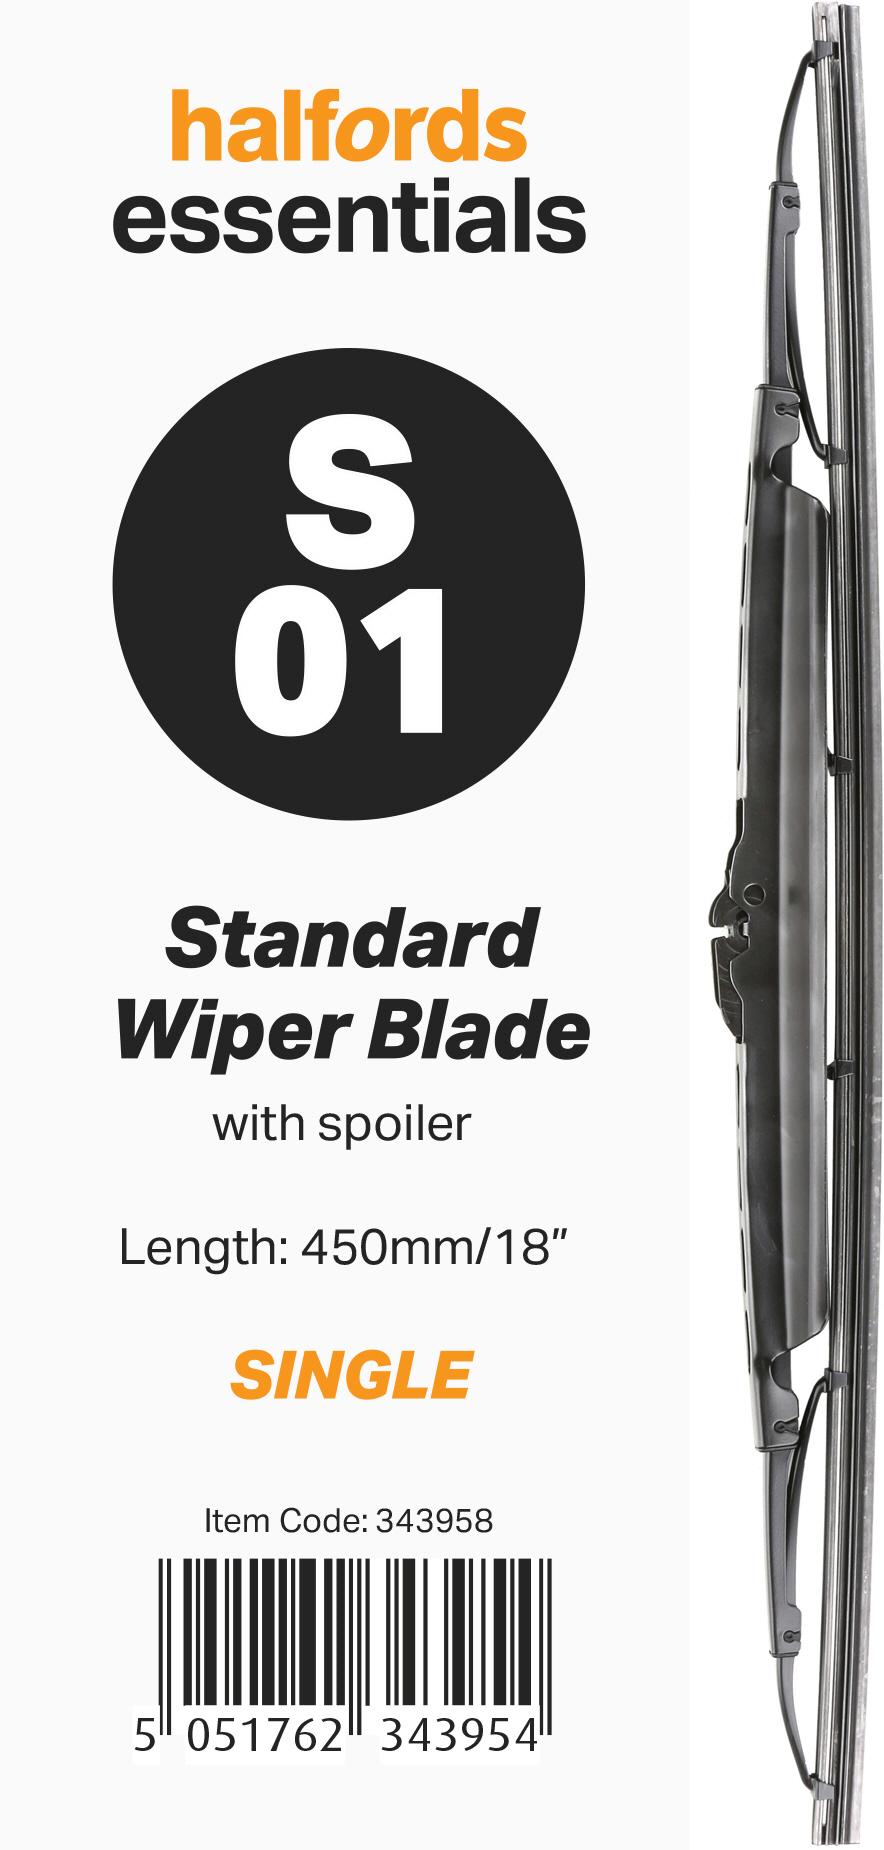 Halfords Essentials Spoiler Wiper Blade S01 - 18 Inch